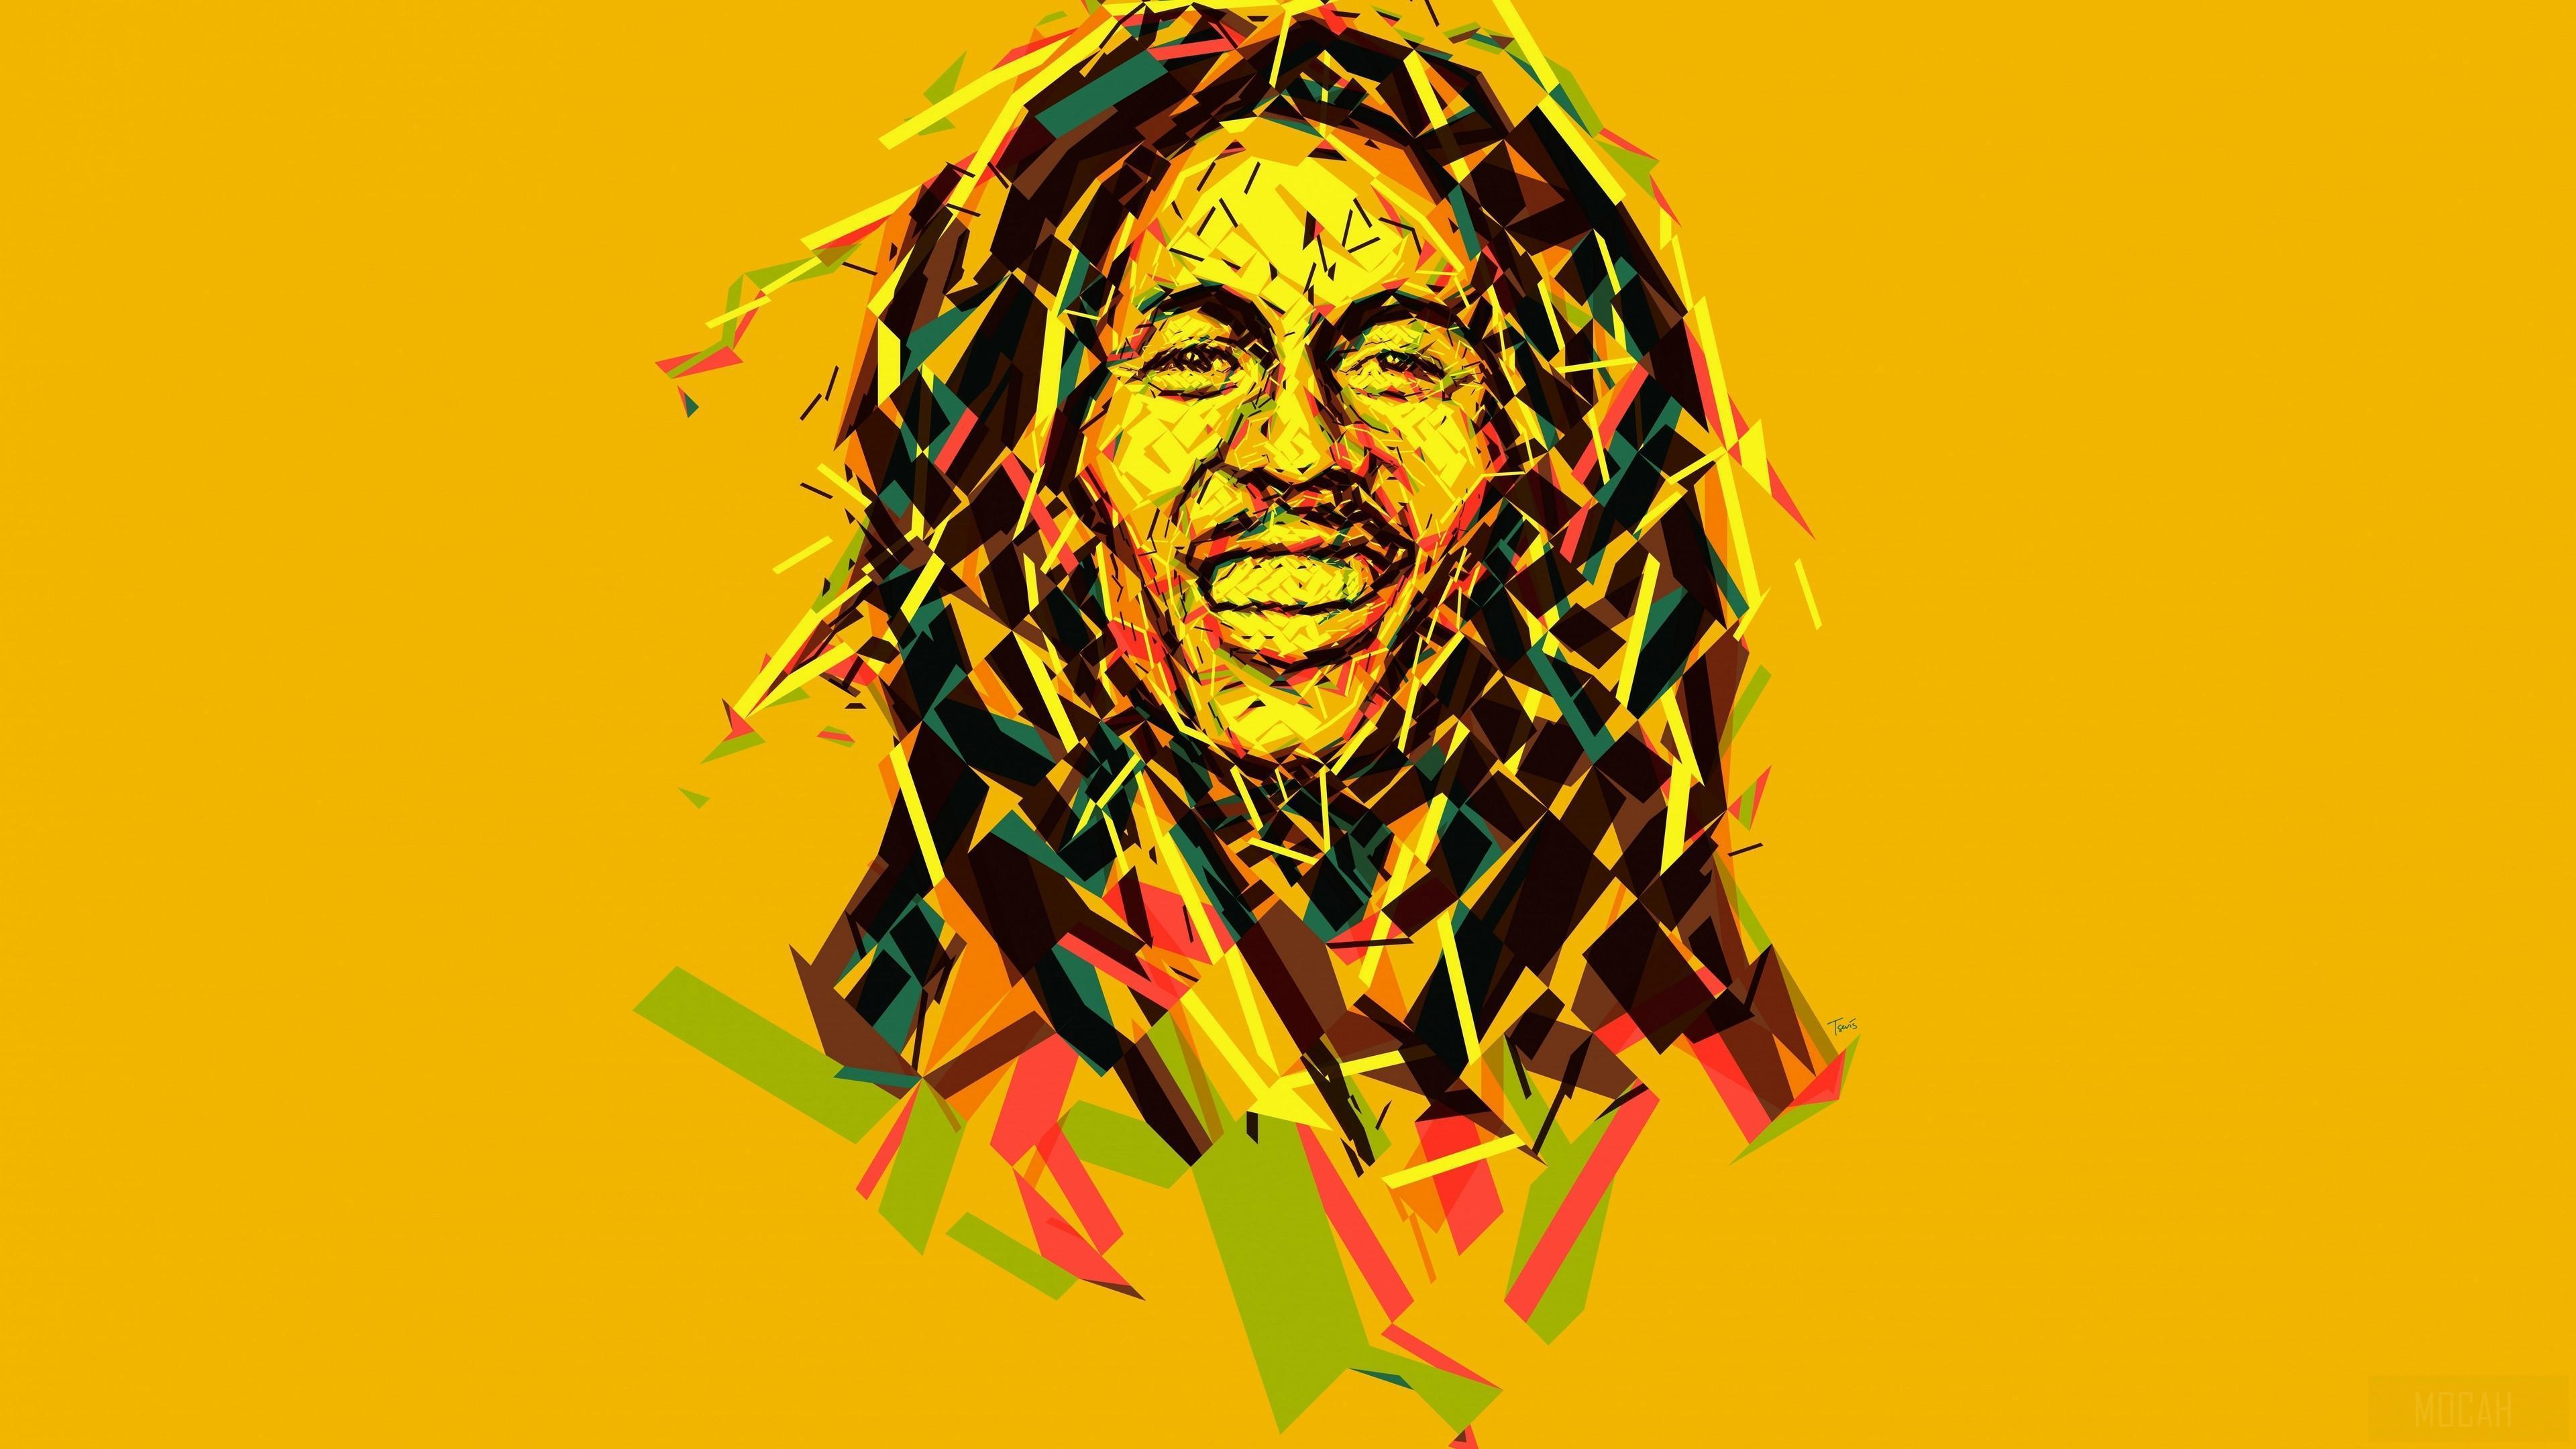 HD wallpaper, Singer, Colors, Artistic, Smile 4K, Bob Marley, Jamaican, Face